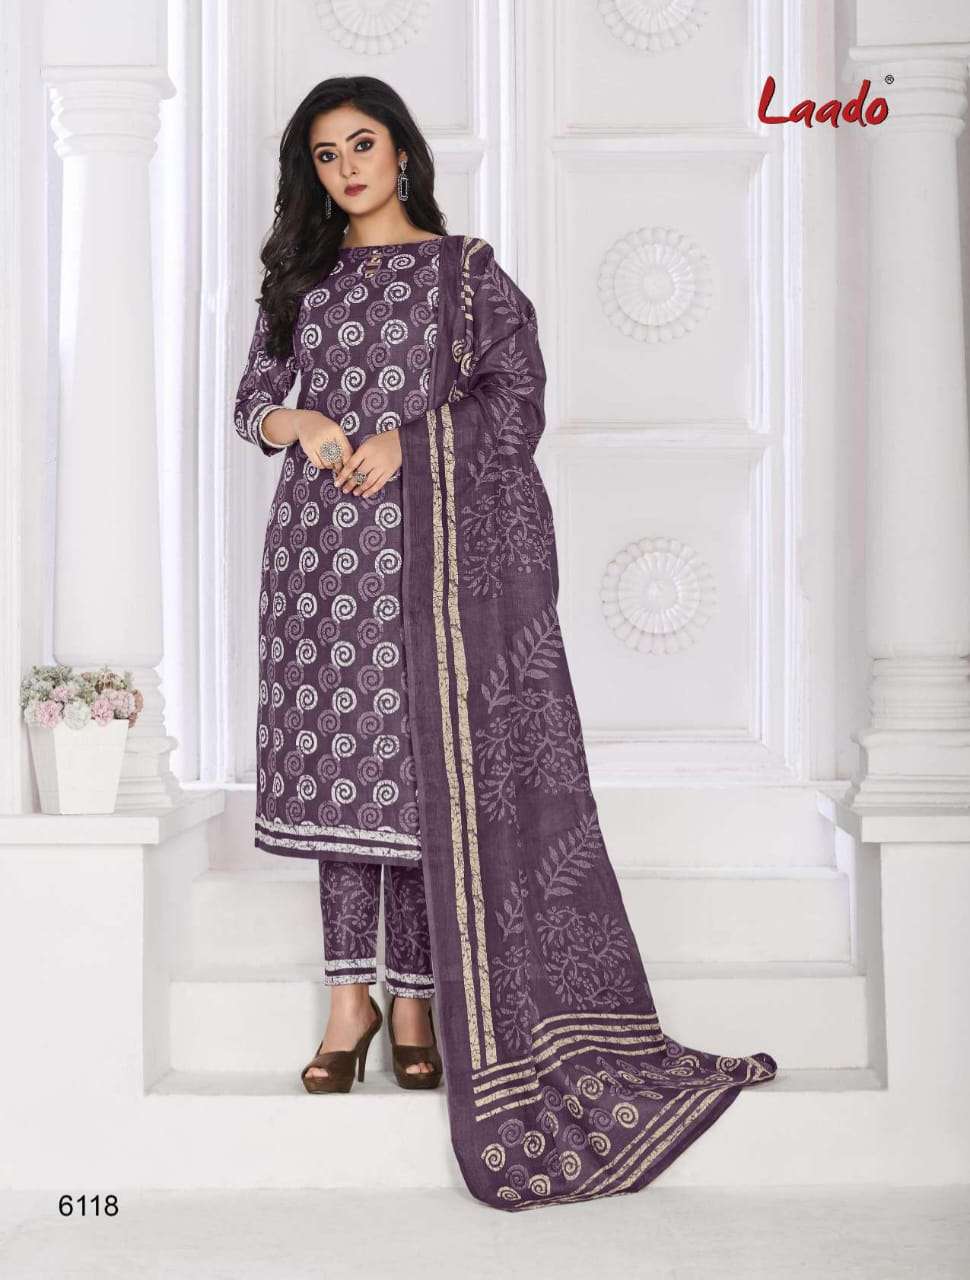 Laado Vol 61 By Hanuman Printed Cotton Dress Wholesale online Lowest Price Salwar Suit Set